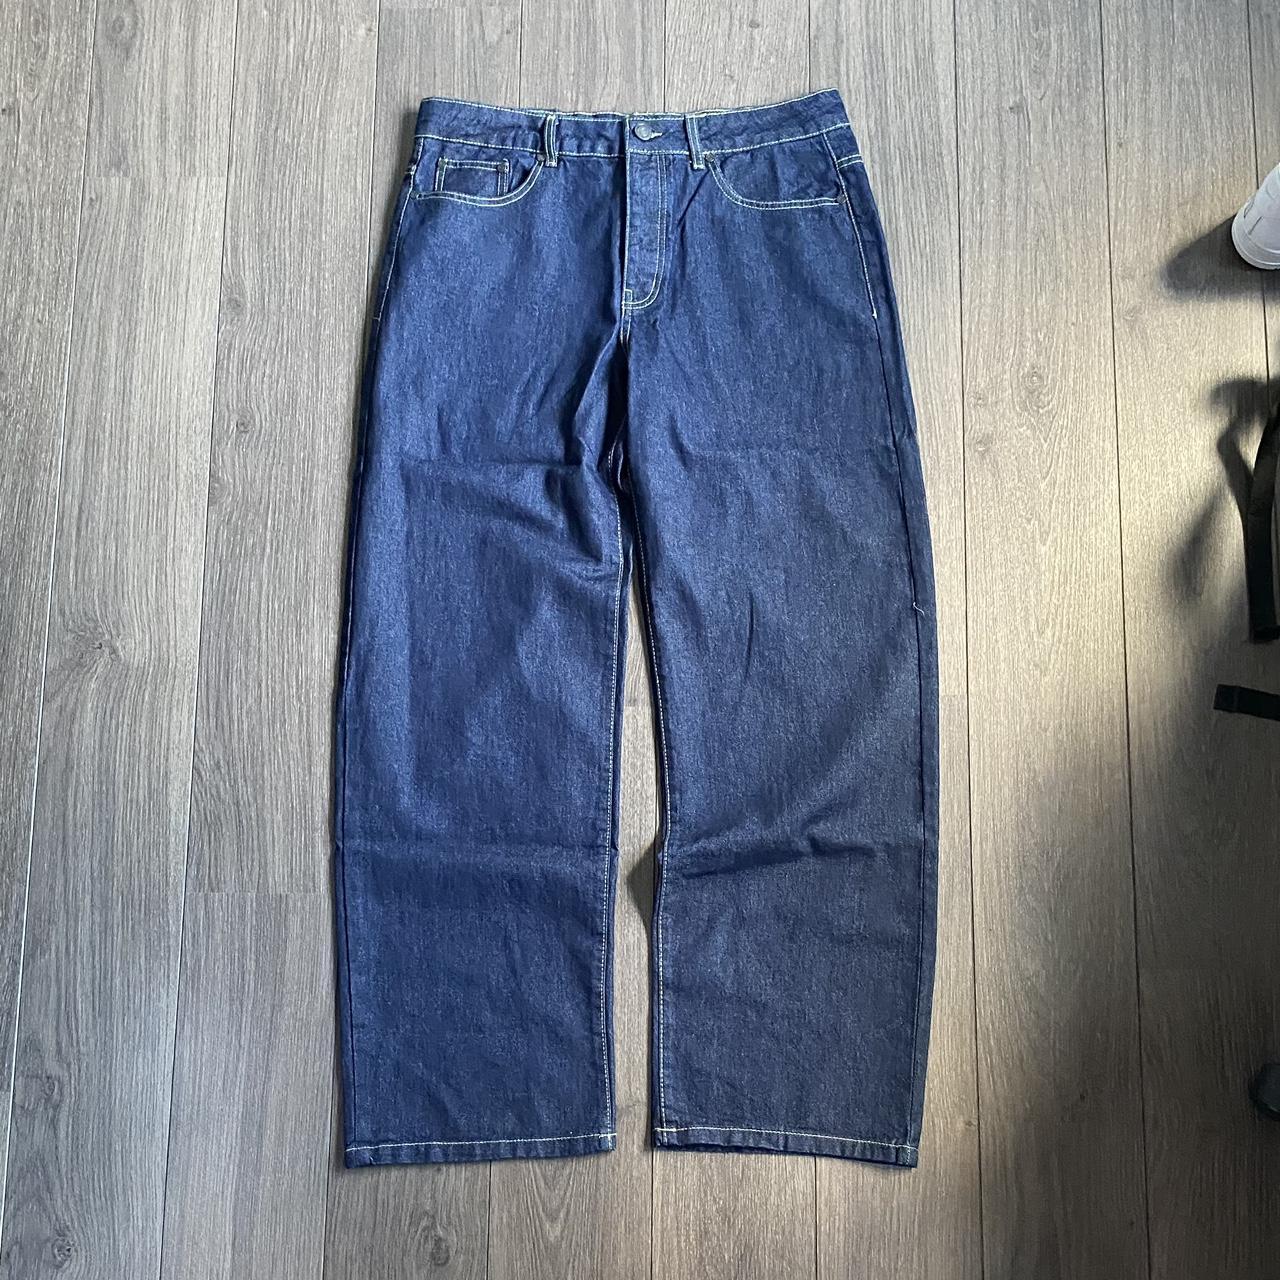 Baggy blue jeans. W34 L32. Good condition. Modelled... - Depop